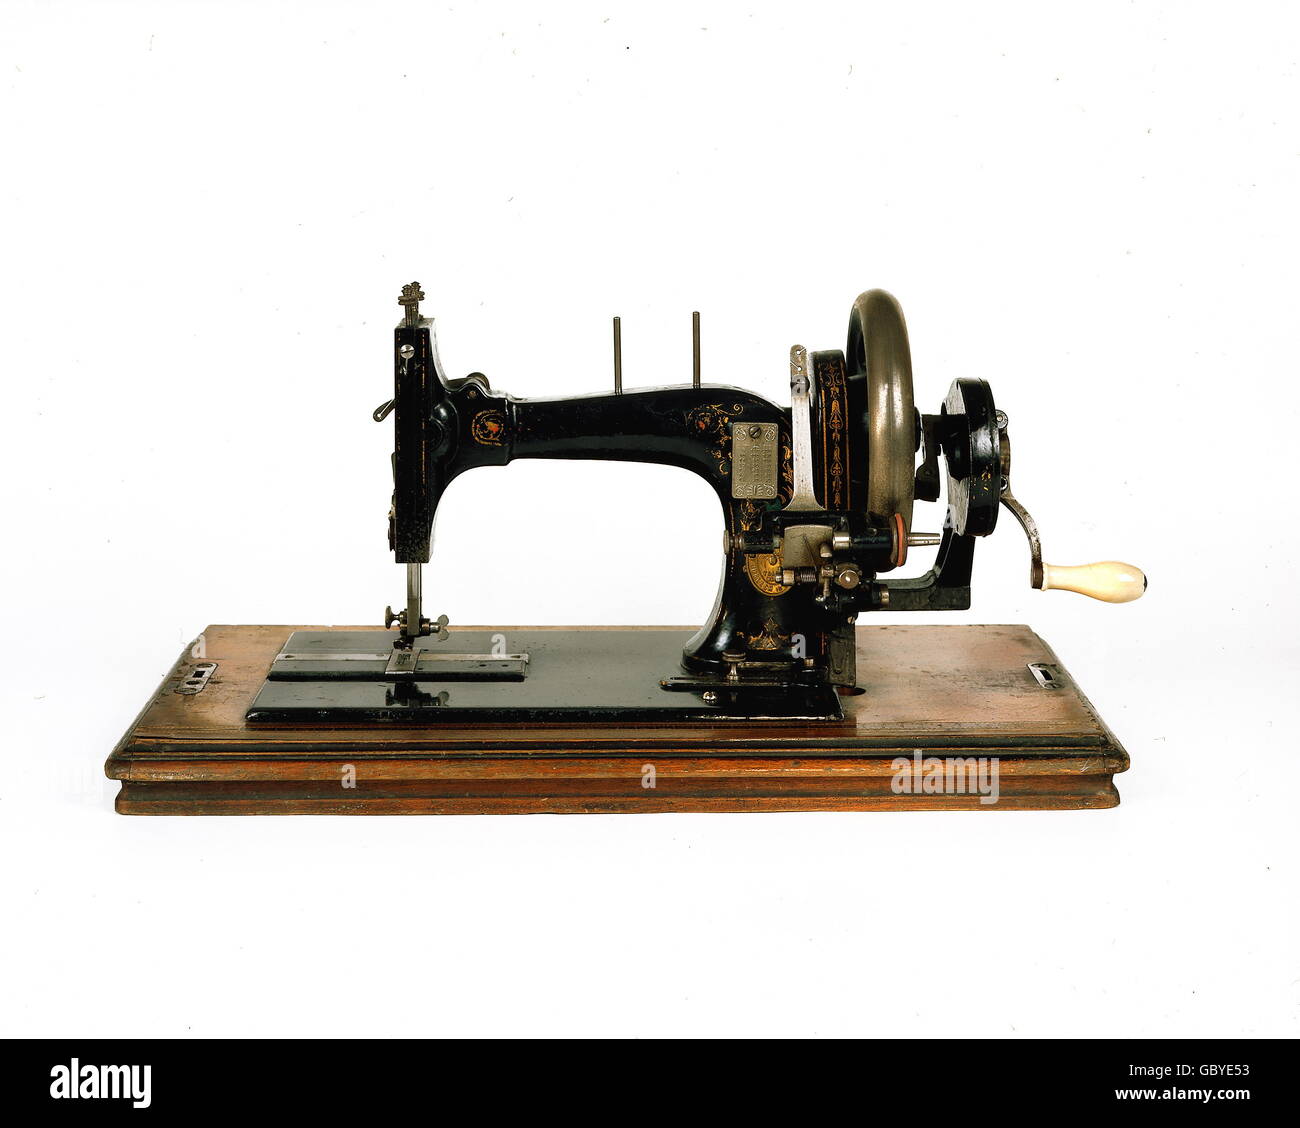 Manivela maquina de coser fotografías e imágenes de alta - Alamy